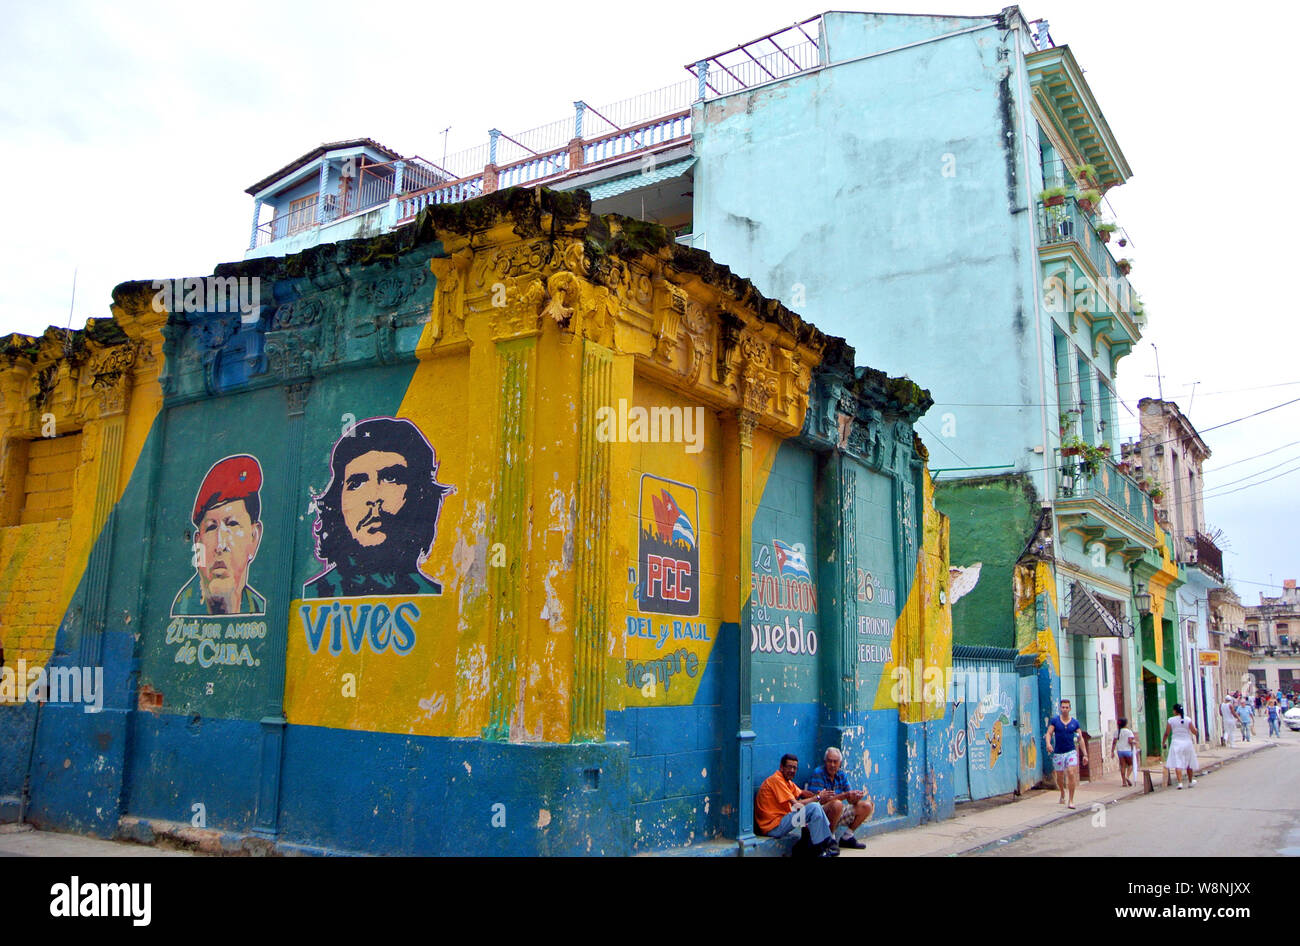 political graffiti  covered walls in poor neighborhoodof havana cuba Stock Photo